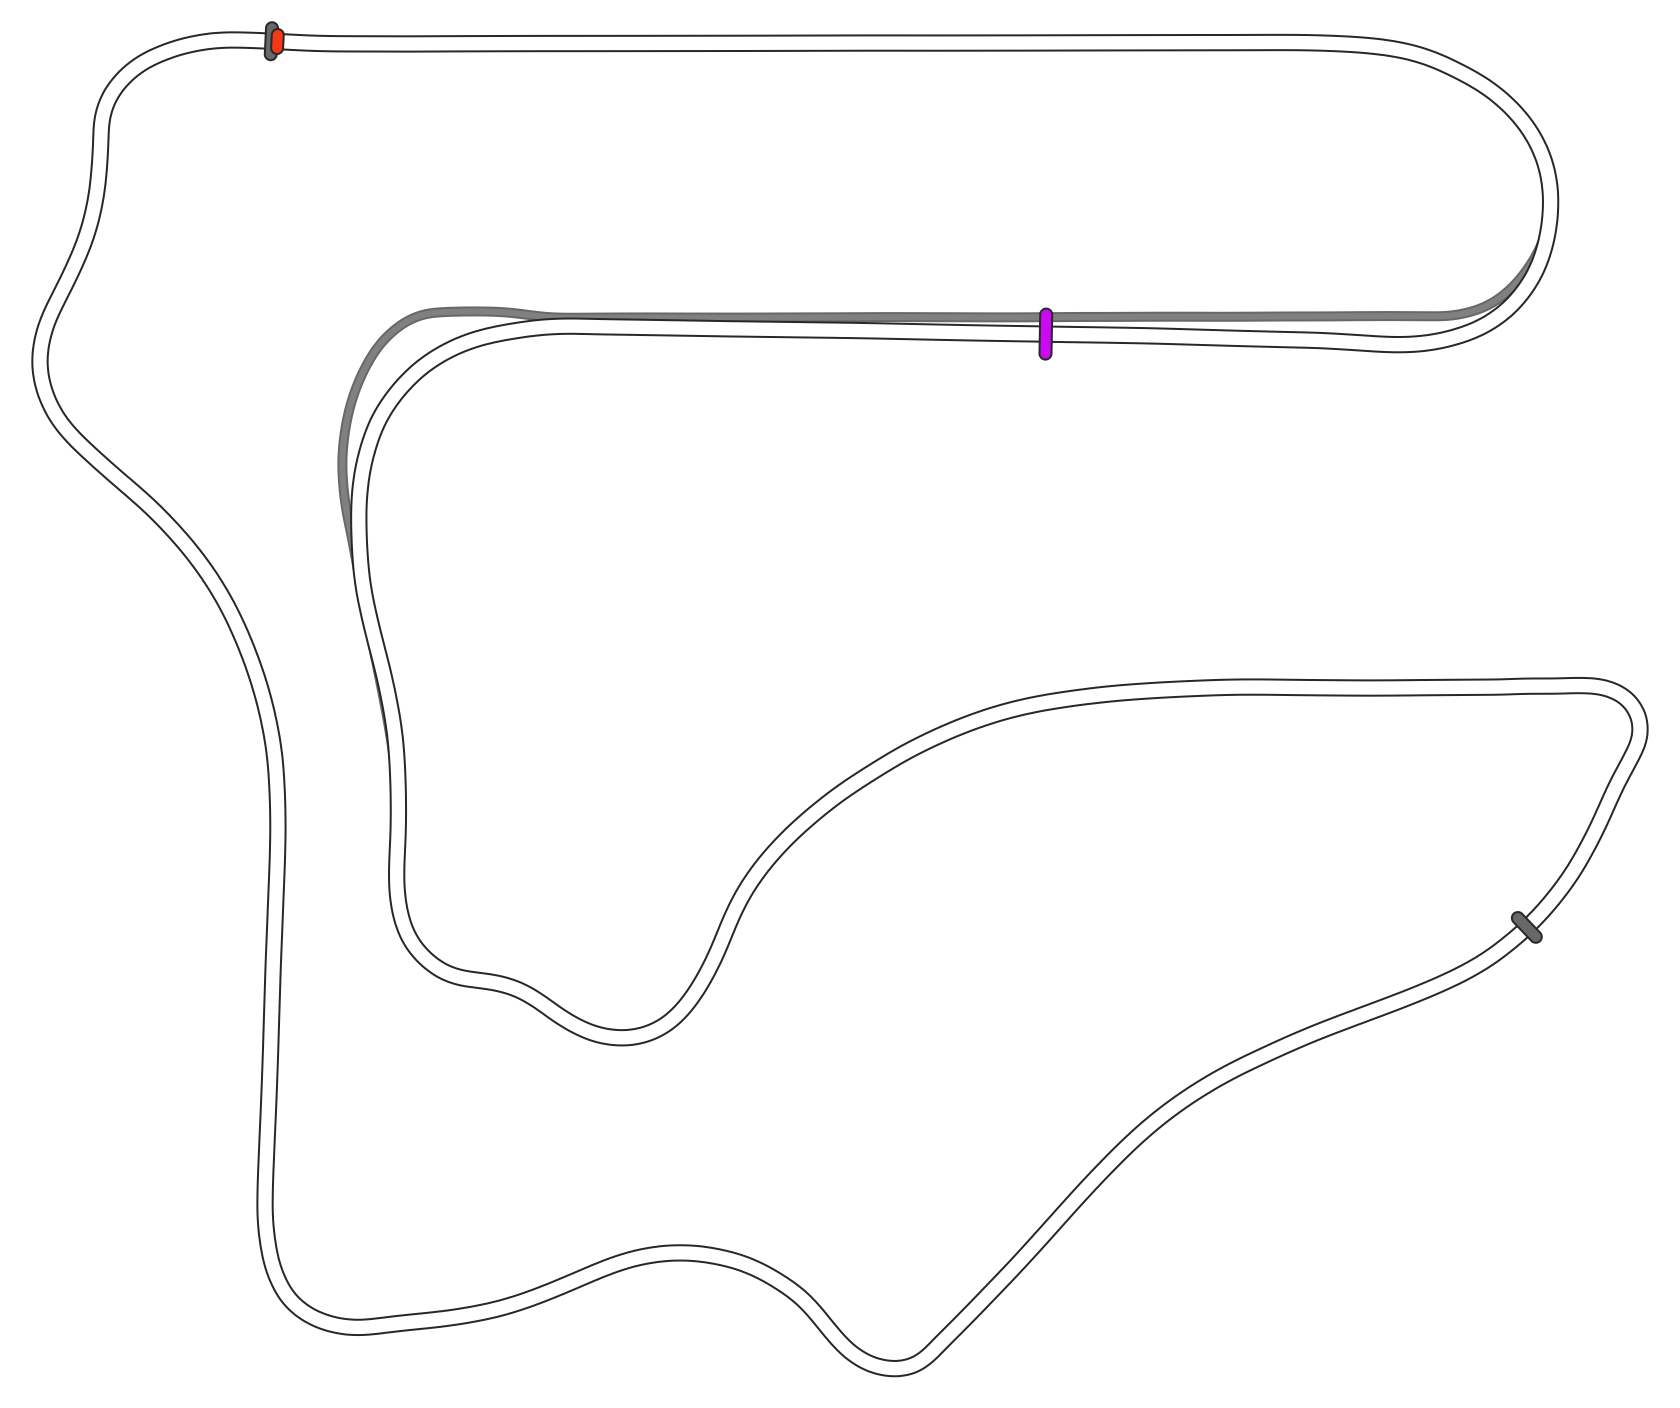 Sebring International Raceway (Raceday)